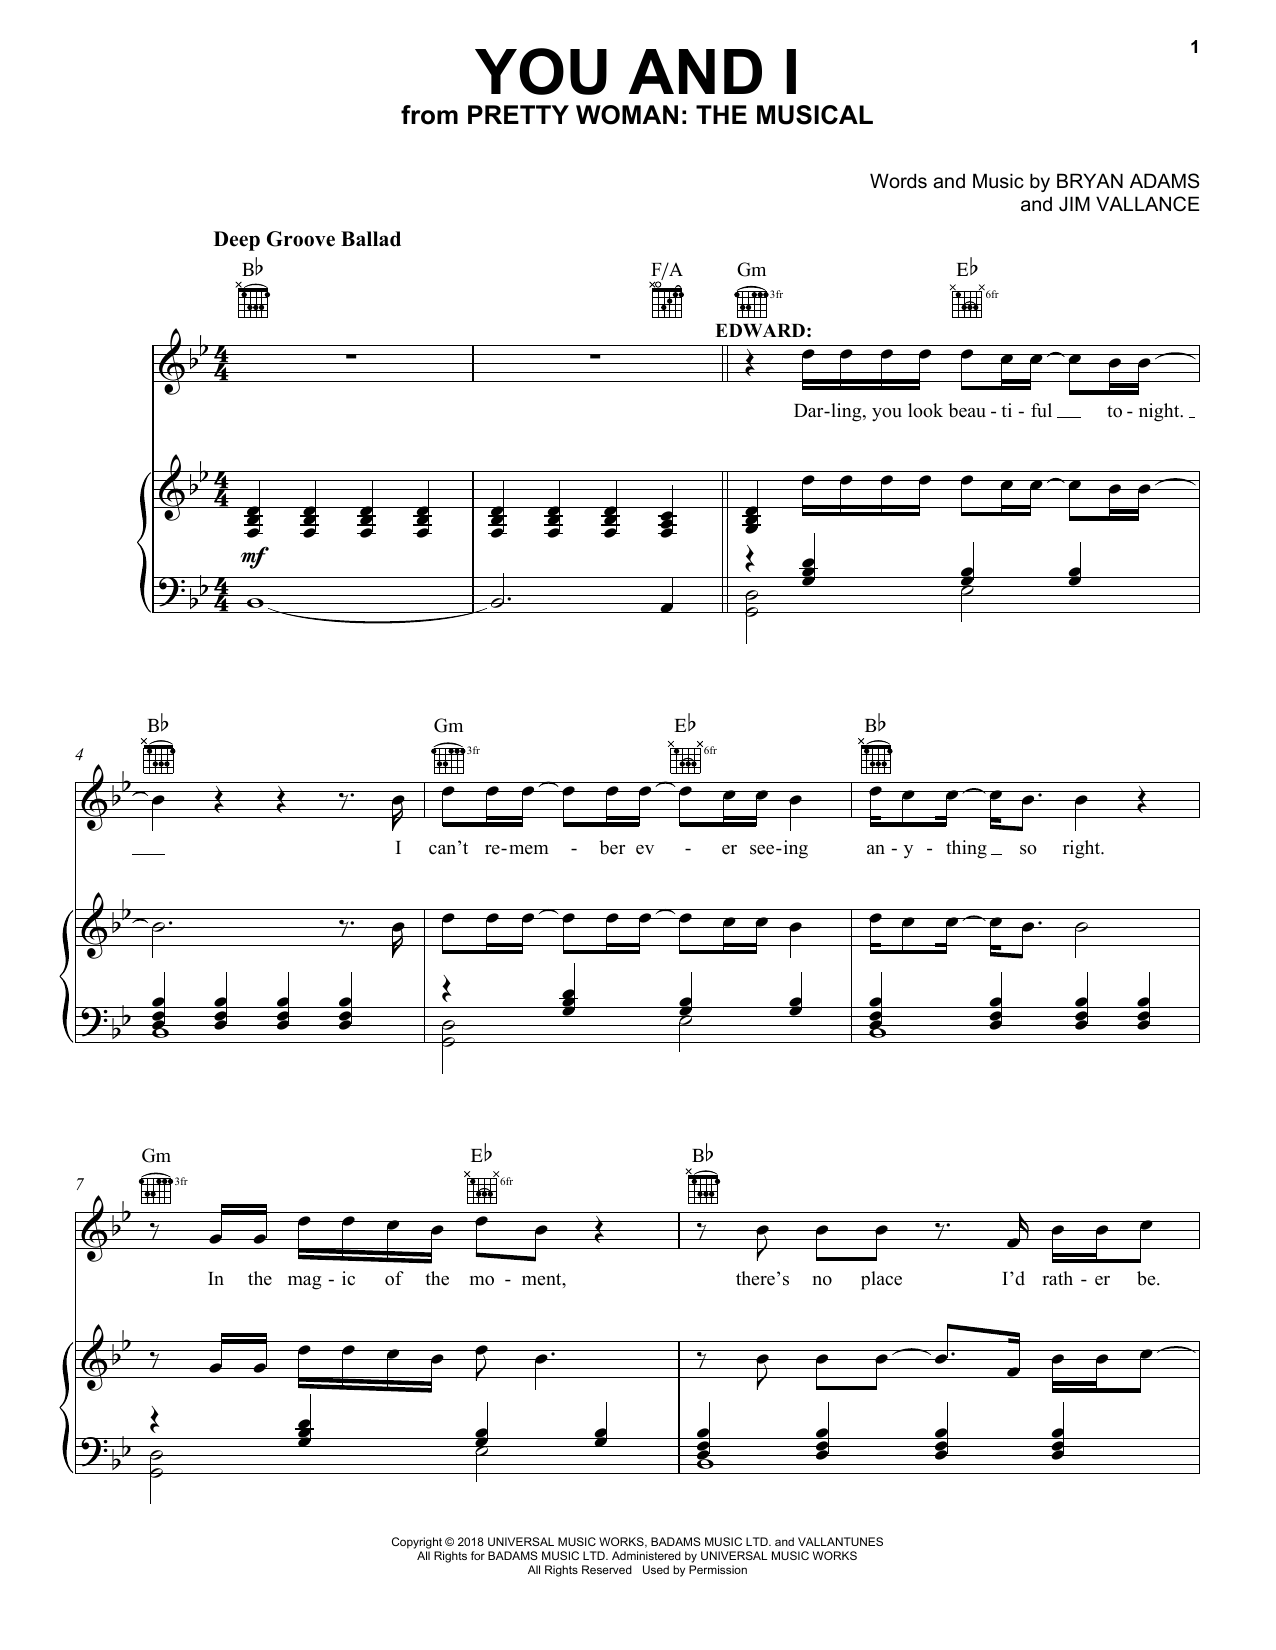 Sinewi Sistemáticamente basura Bryan Adams & Jim Vallance "You And I (from Pretty Woman: The Musical)" Sheet  Music | Download PDF Score 408910